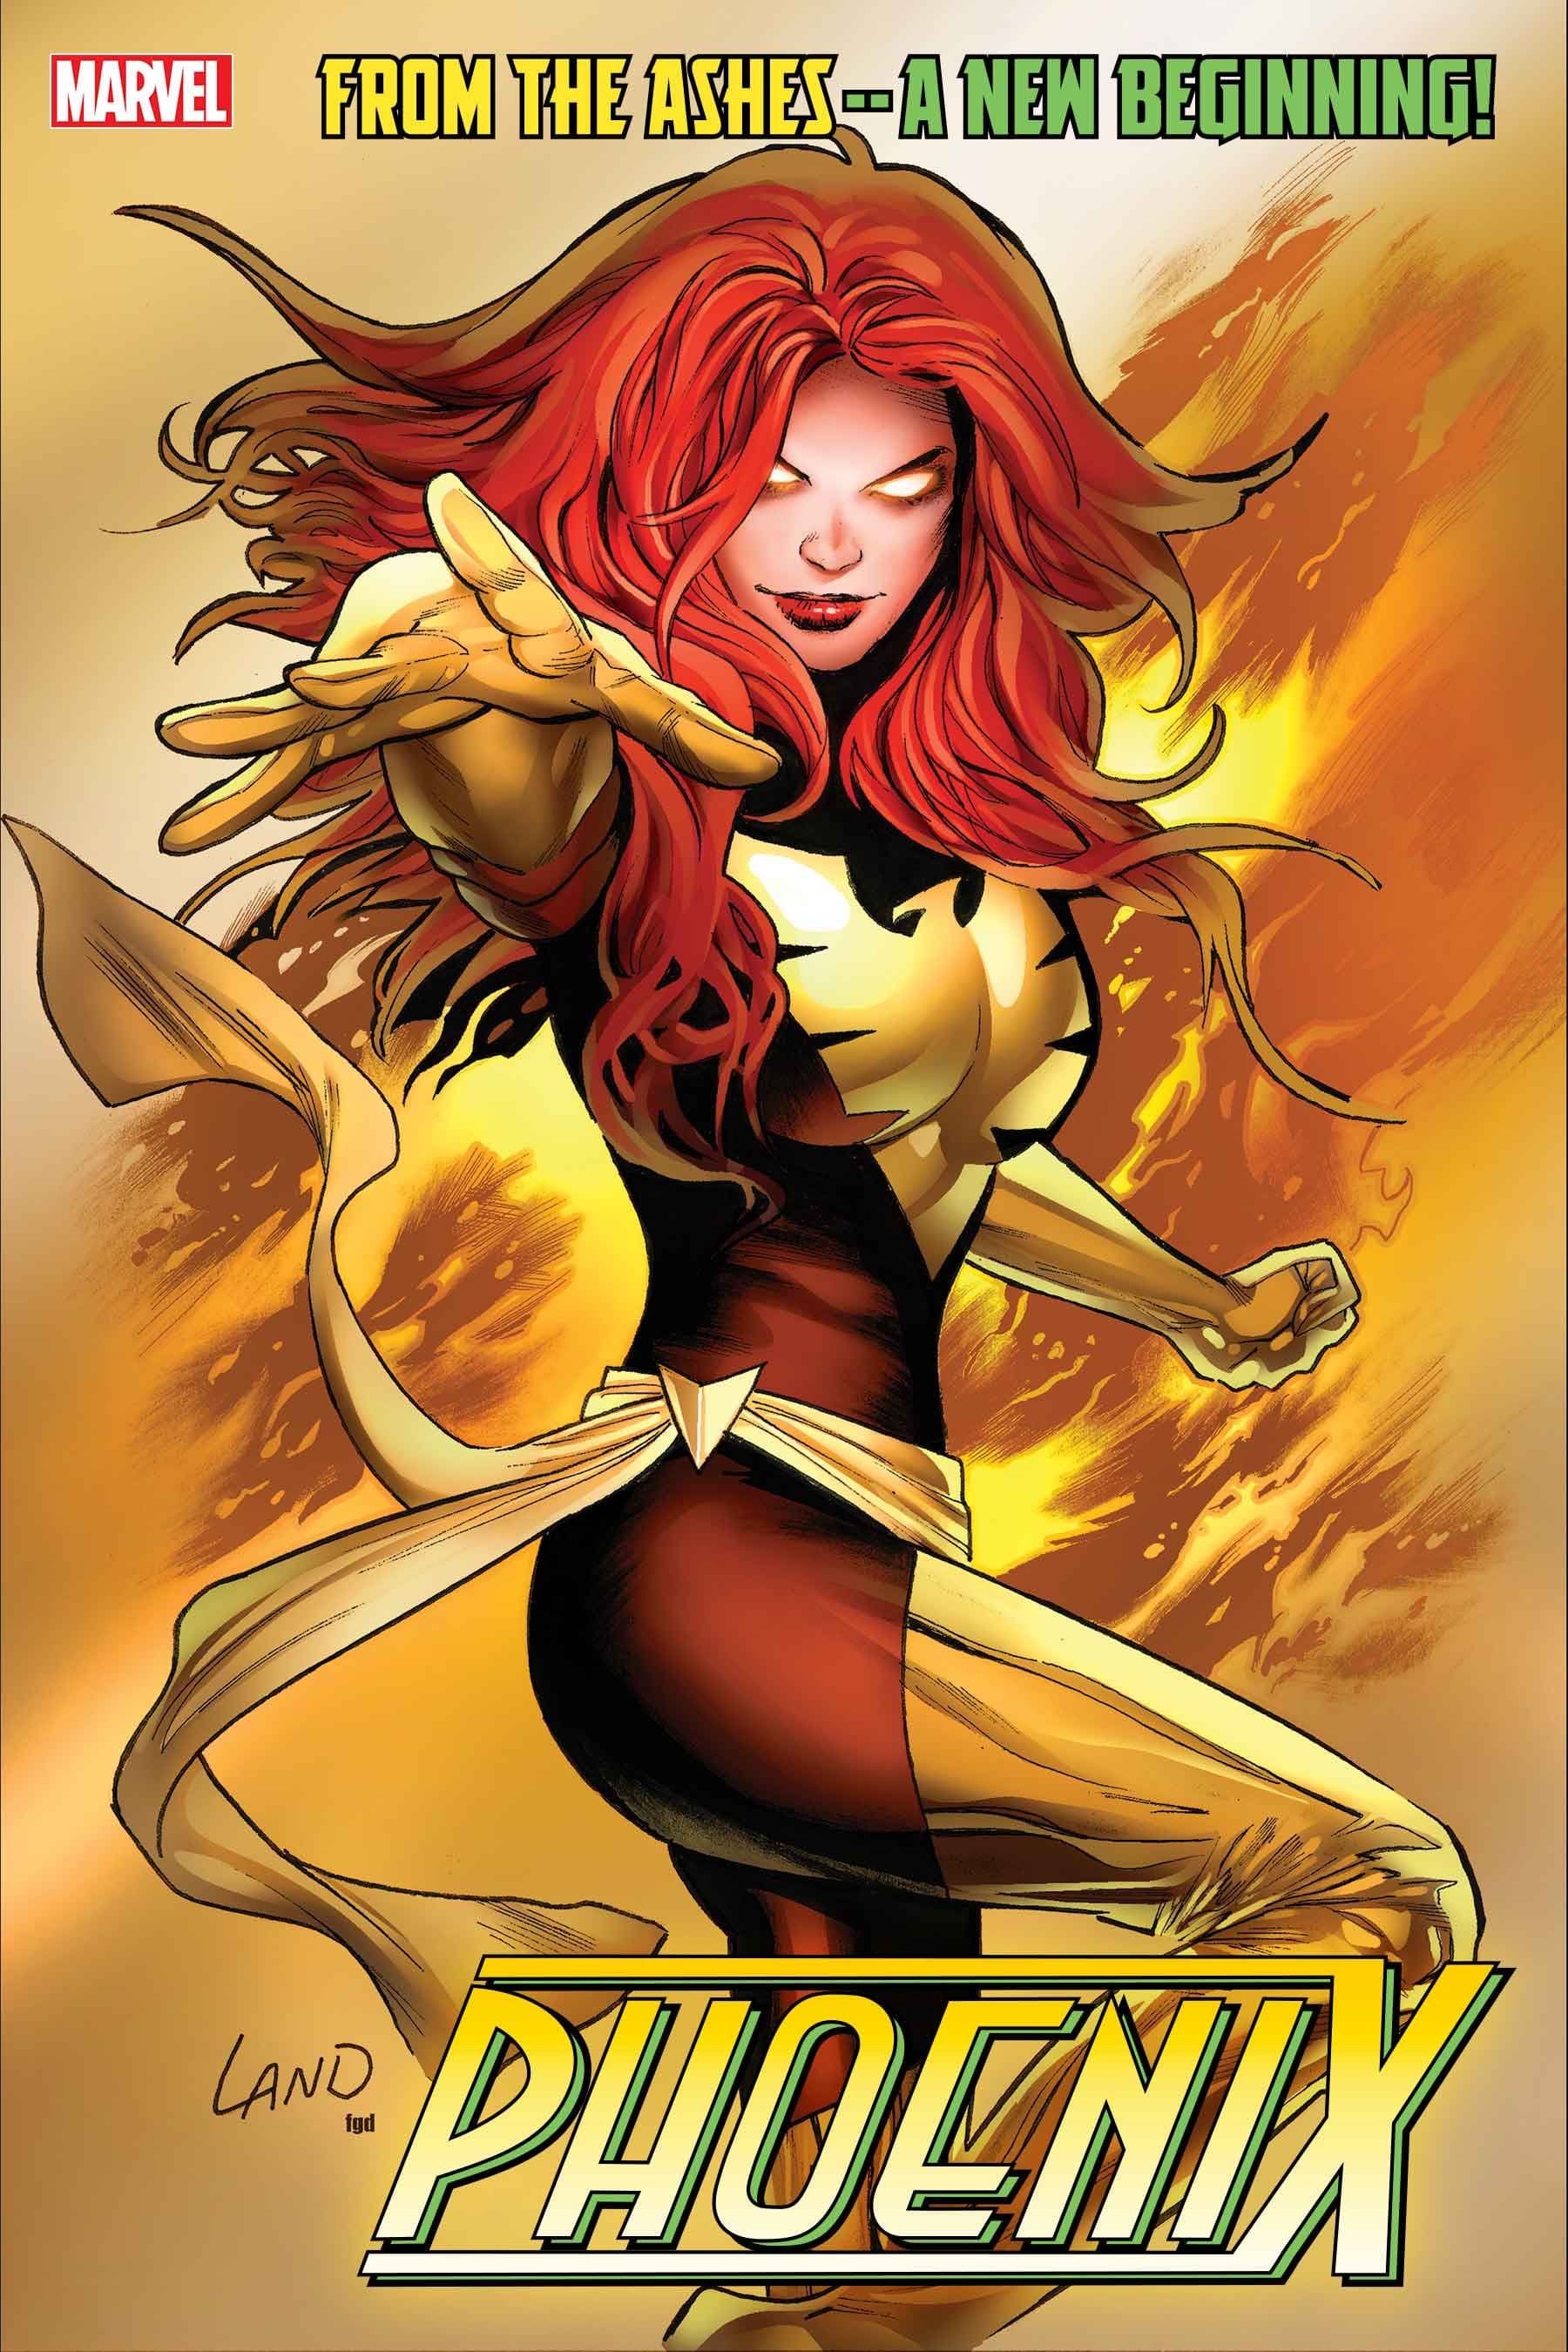 Phoenix #1 variant cover by Greg Land depicting the Dark Phoenix version of Jean Grey